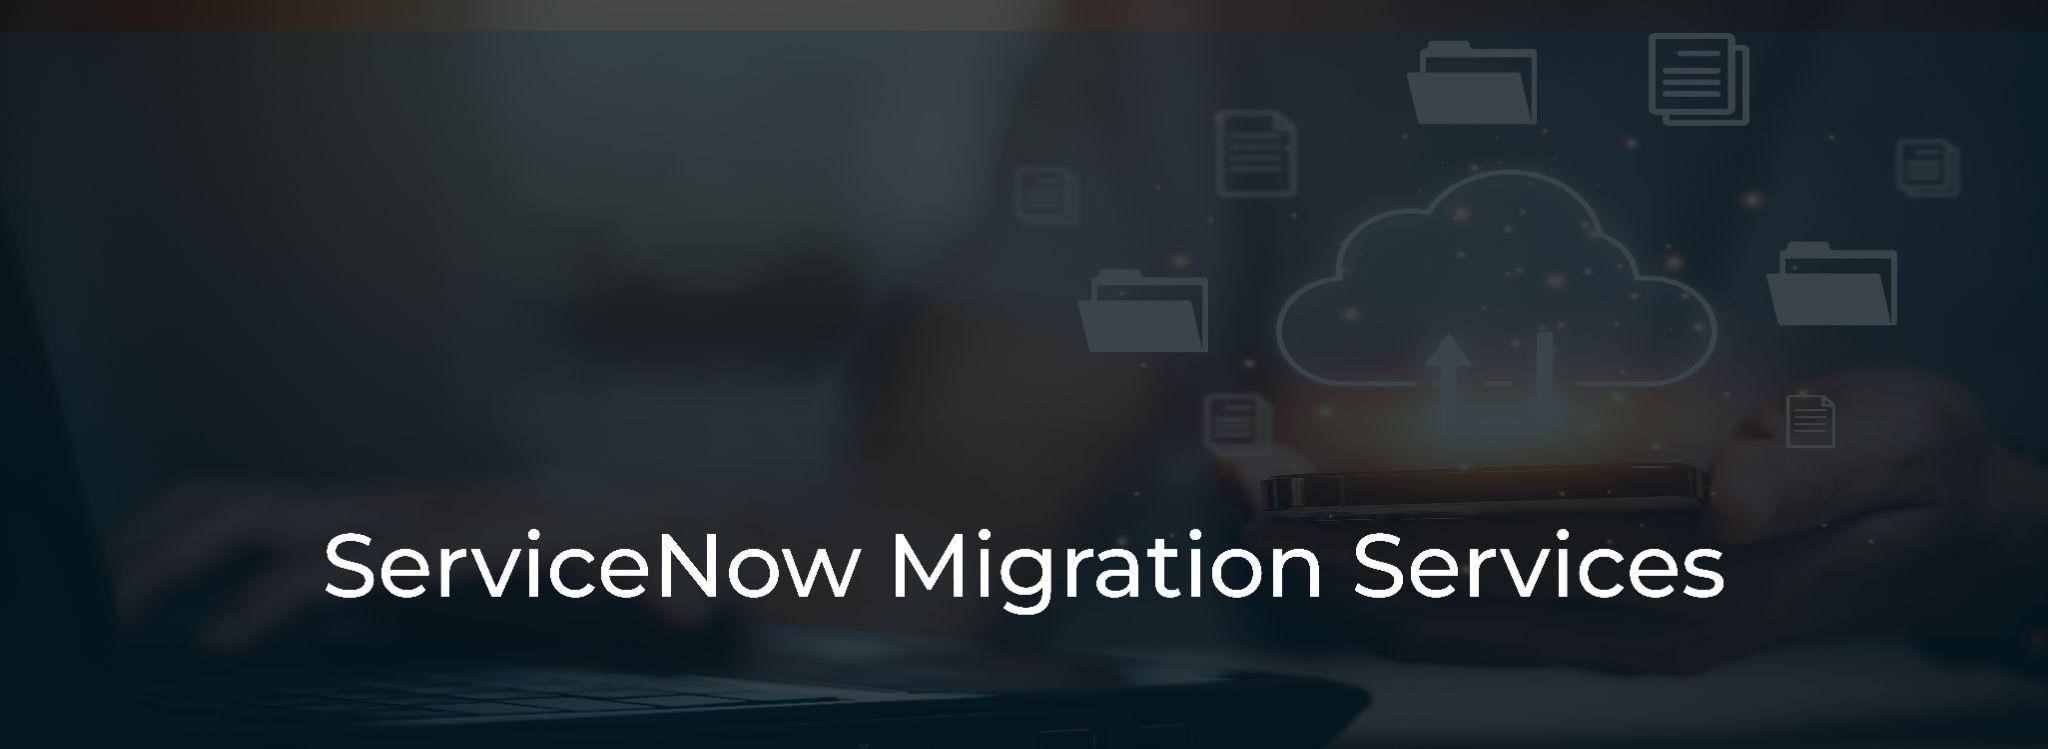 ServiceNow Migration Services